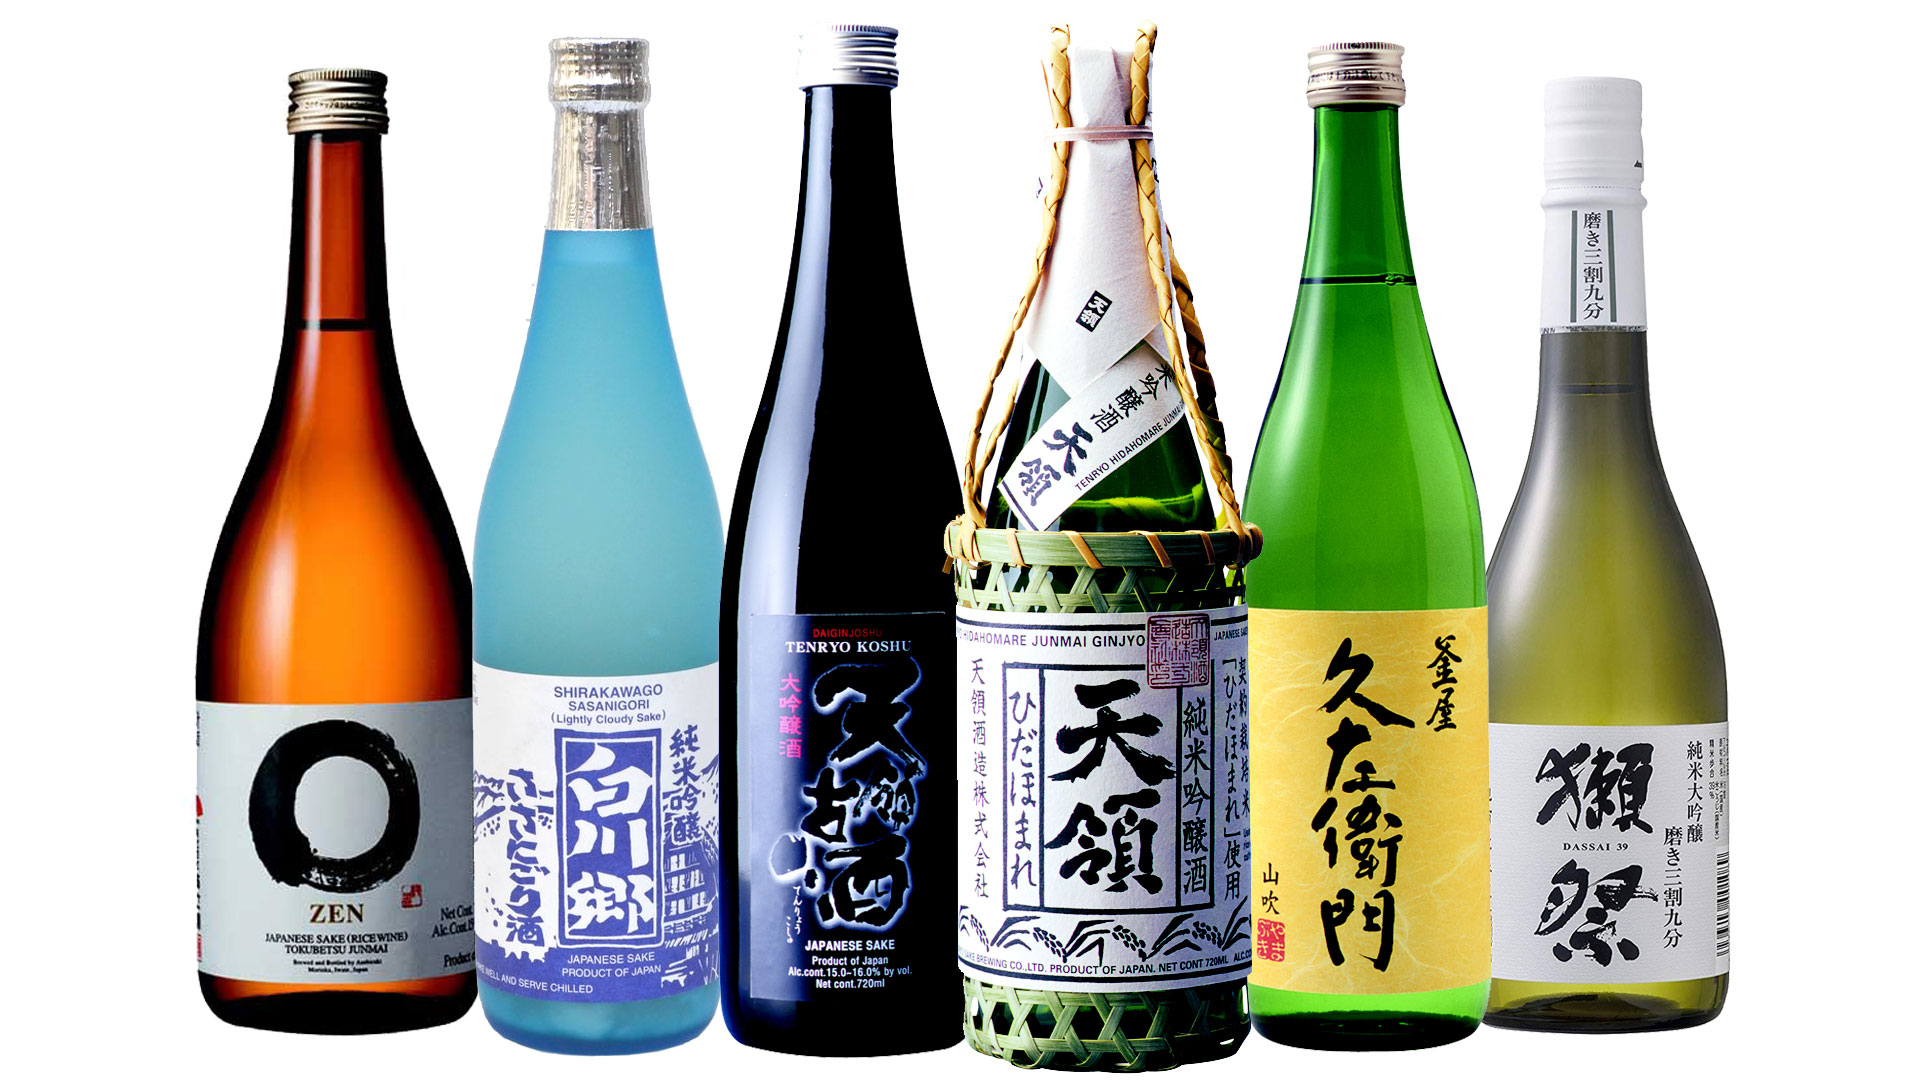 Tenryo sake